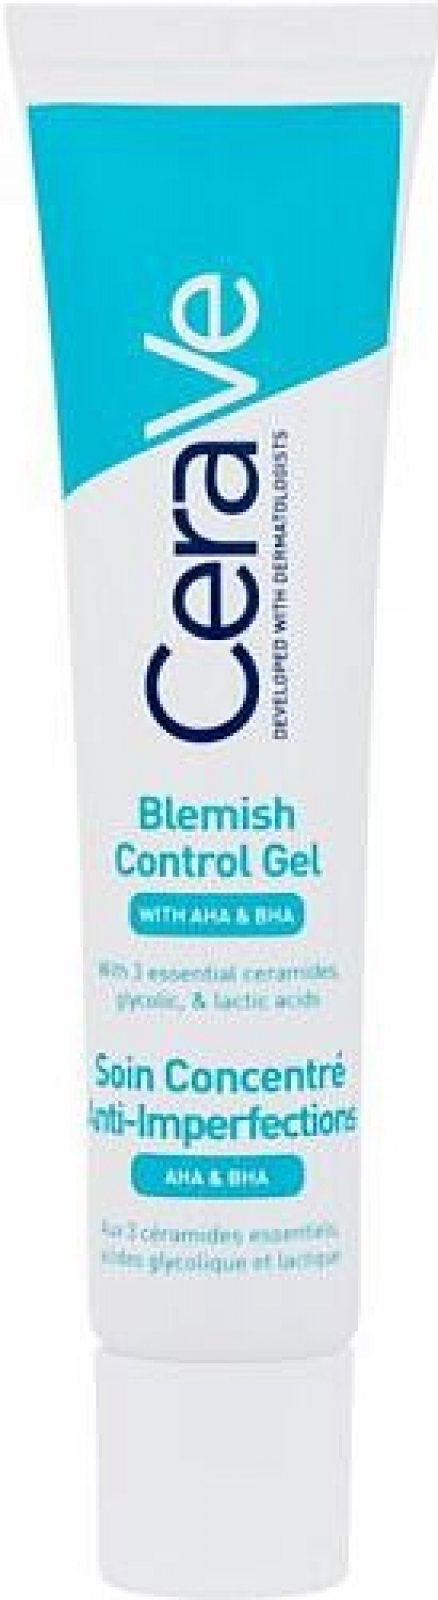 CeraVe, Blemish Control Gel, gel proti nedokonalostem pleti, 40 ml